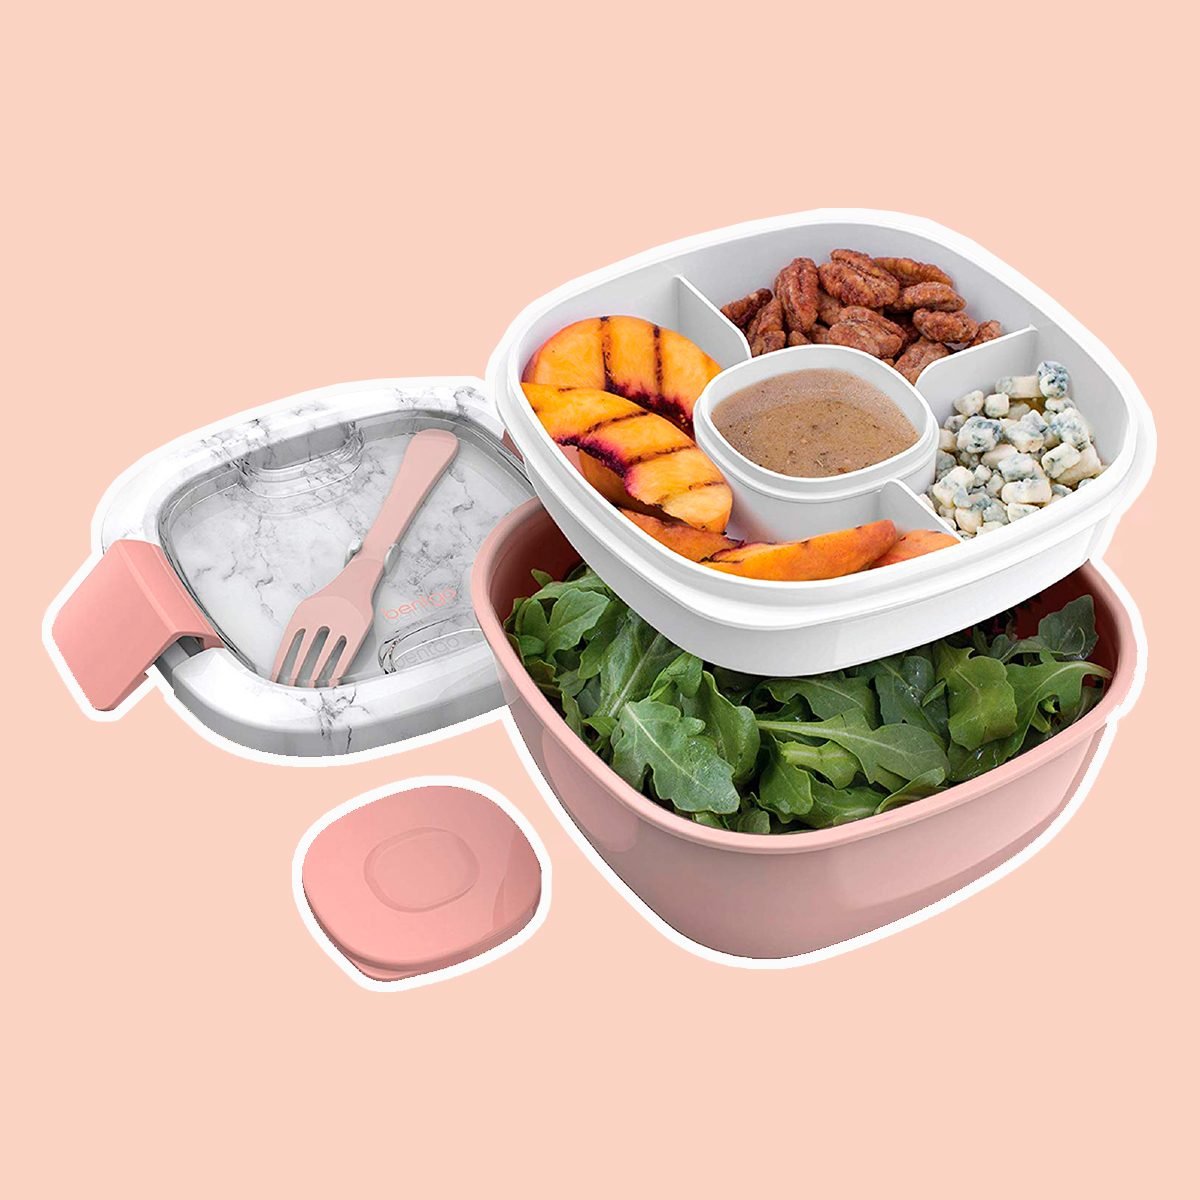 https://www.tasteofhome.com/wp-content/uploads/2020/03/Bentgo-Large-Salad-Container.jpg?fit=700%2C700